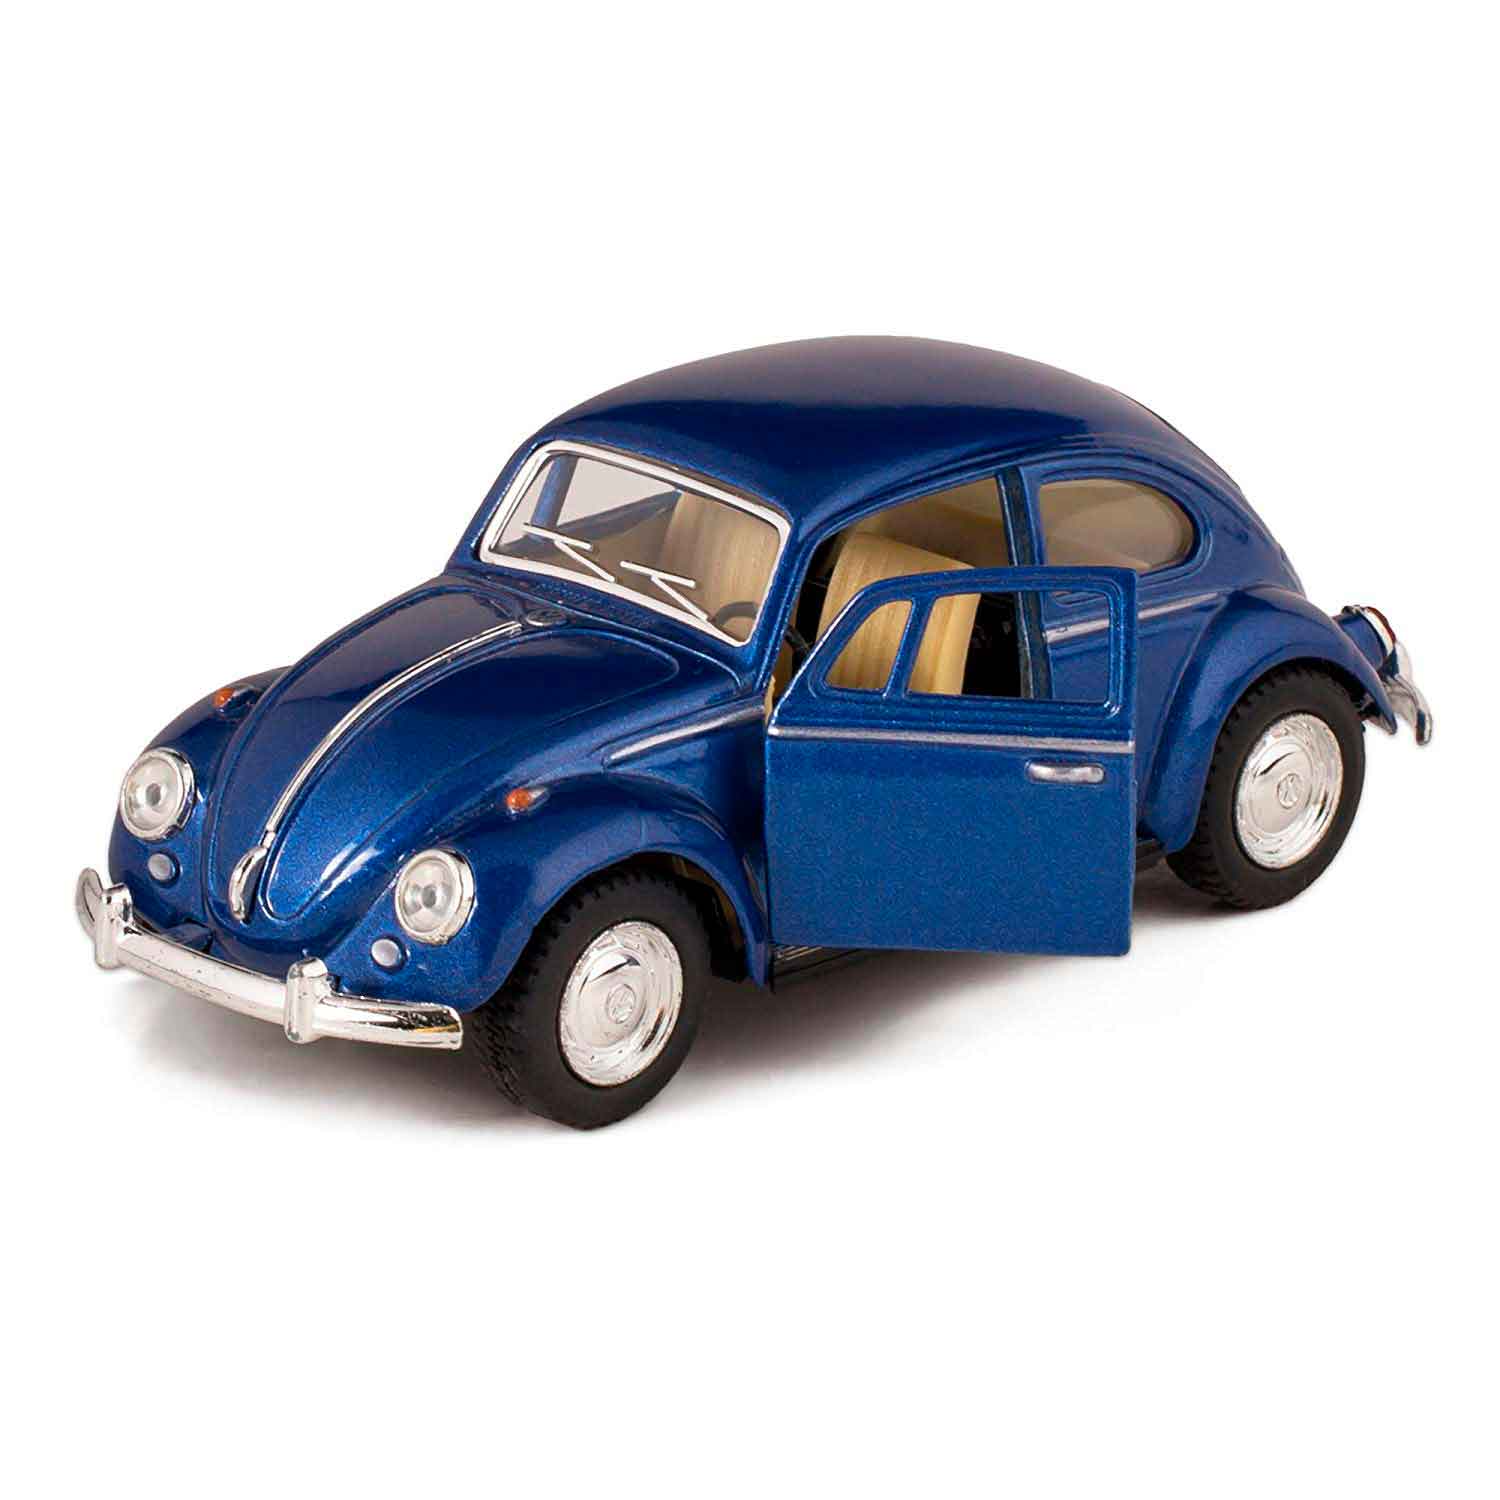 miniatura-1967-volkswagen-fusca-escala-132-azul-classico-01